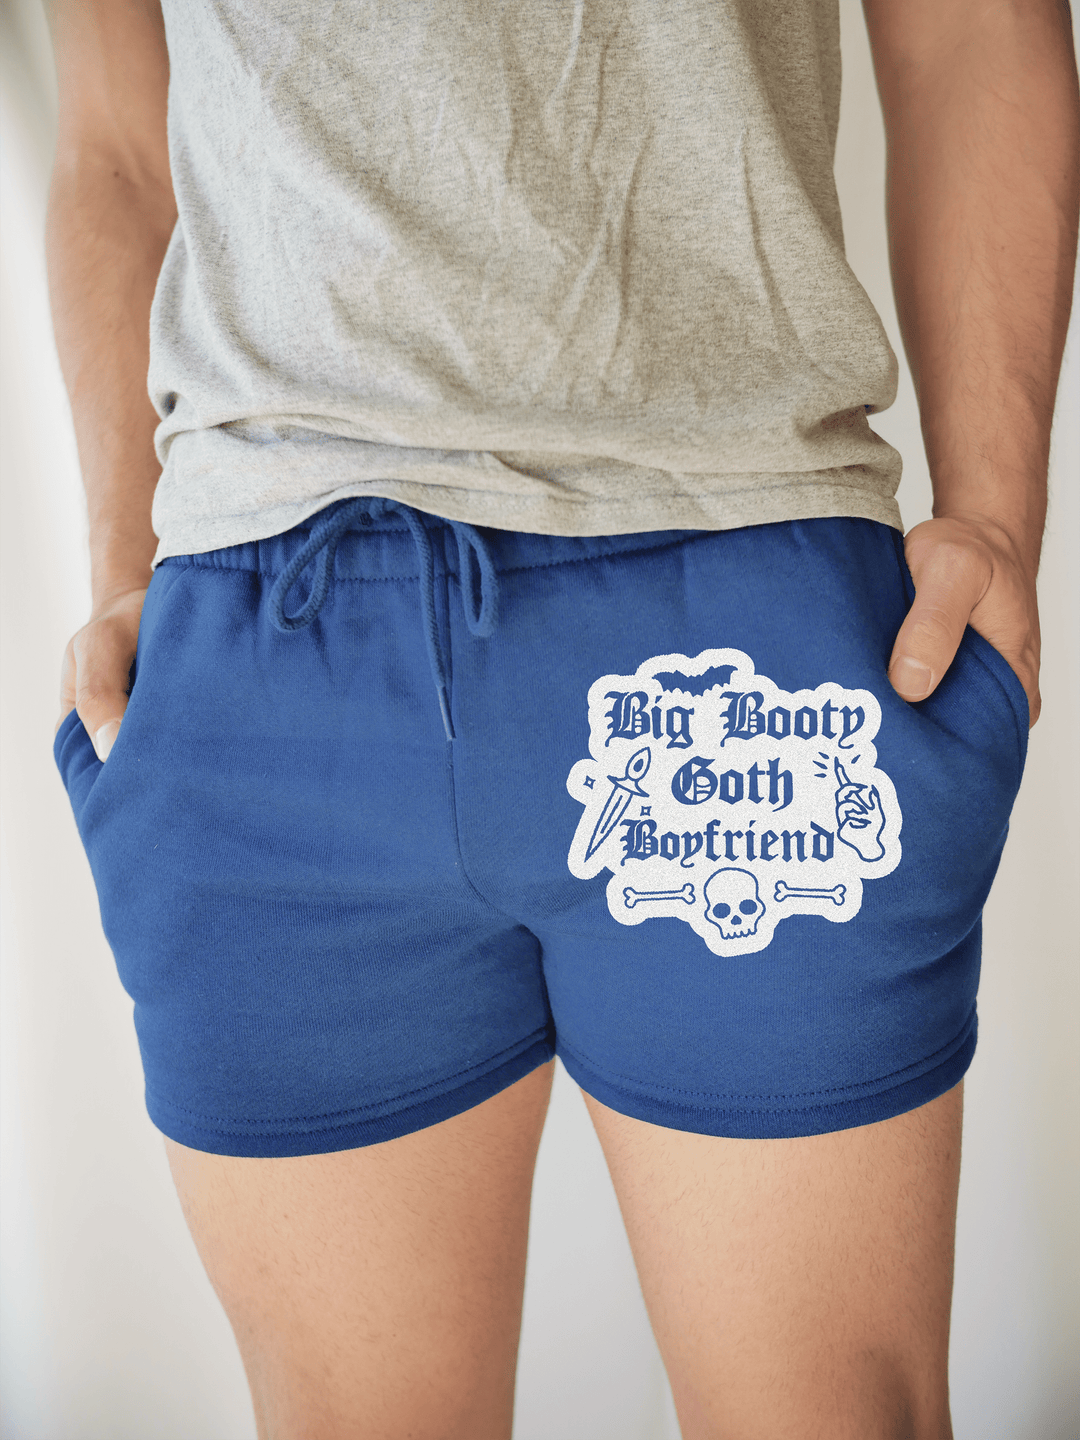 PixelThat Punderwear Shorts Royal Blue / S / Front Big Booty Goth Boyfriend Men's Gym Shorts